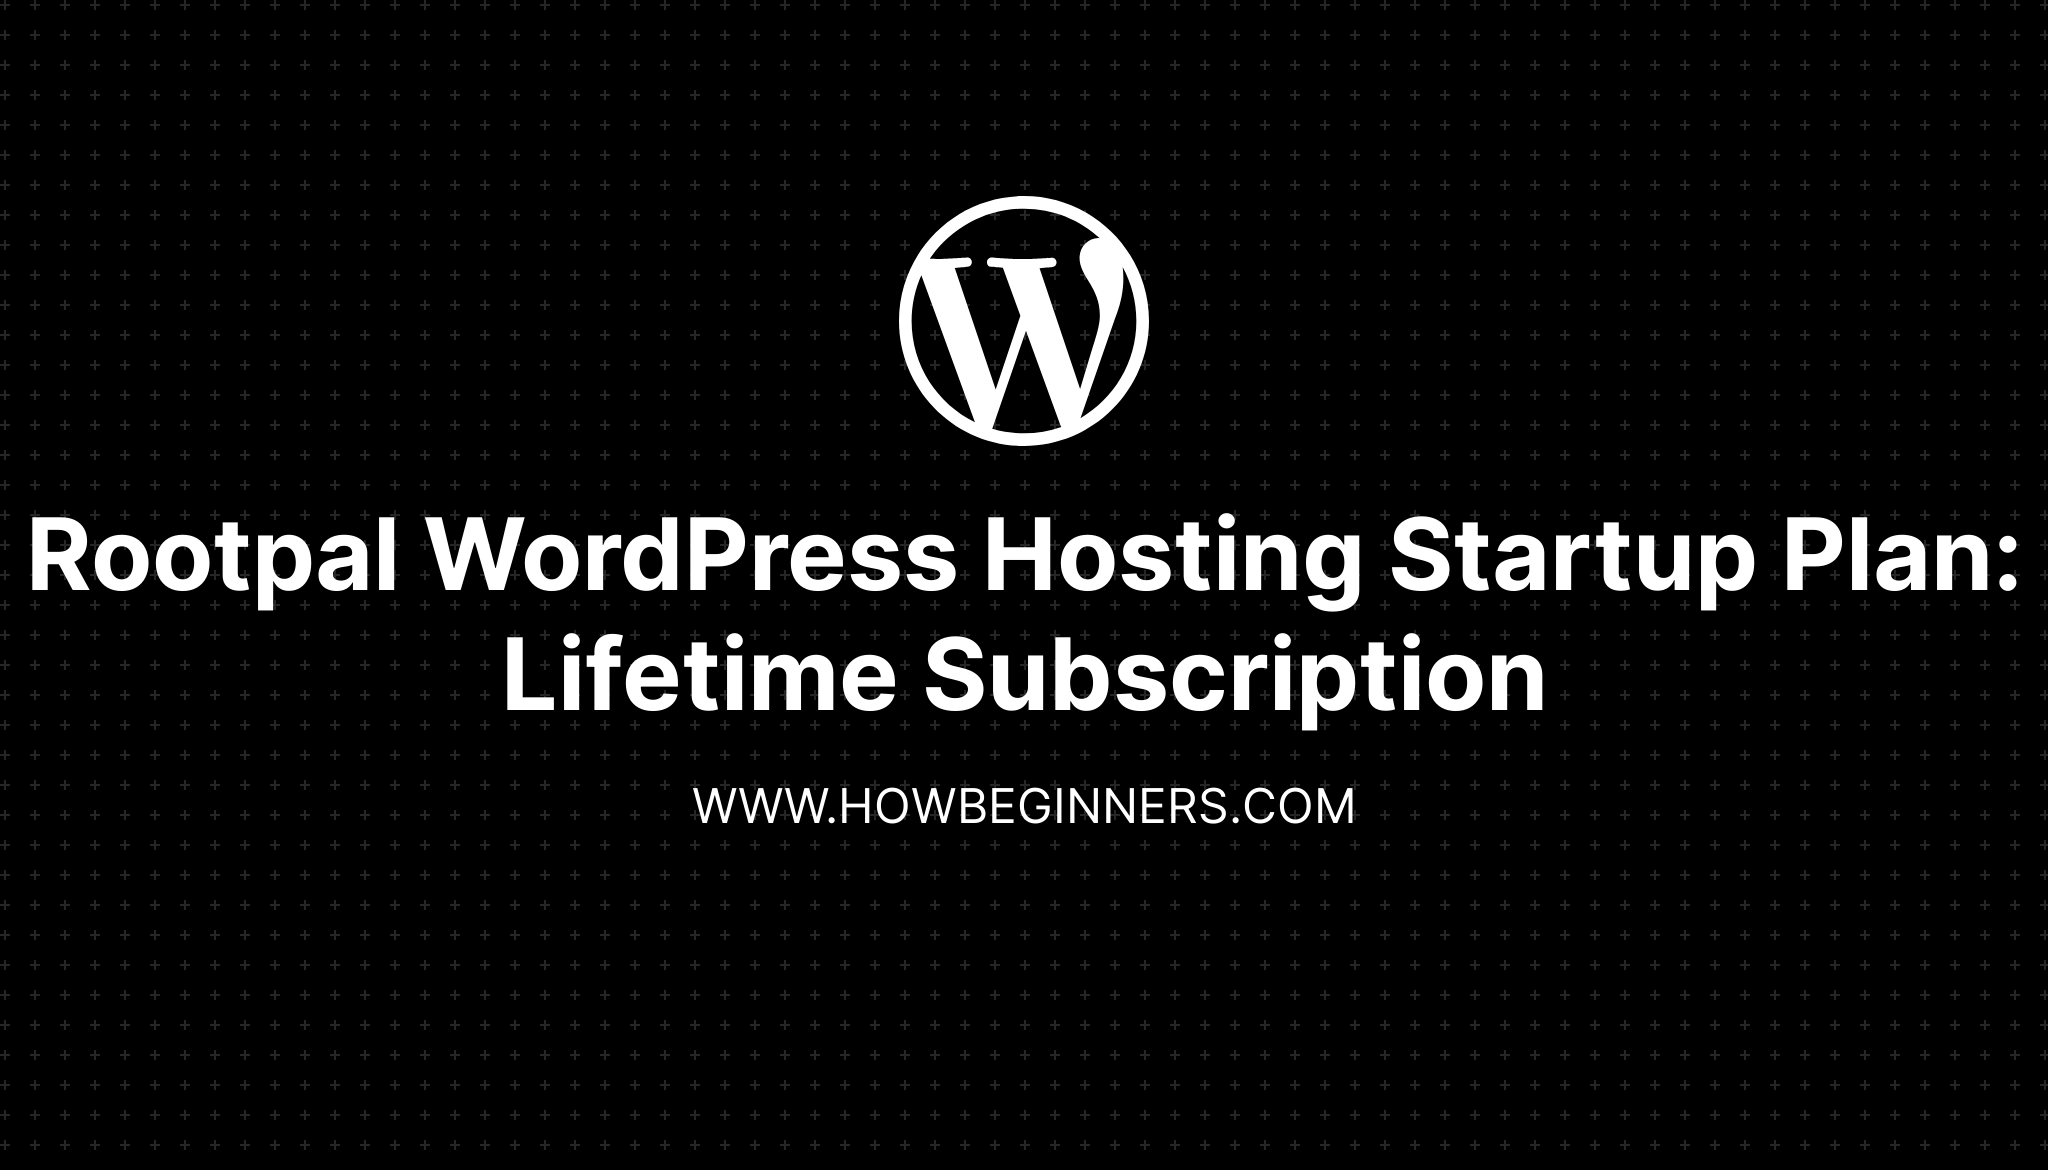 Rootpal WordPress Hosting startup plan lifetime subscription